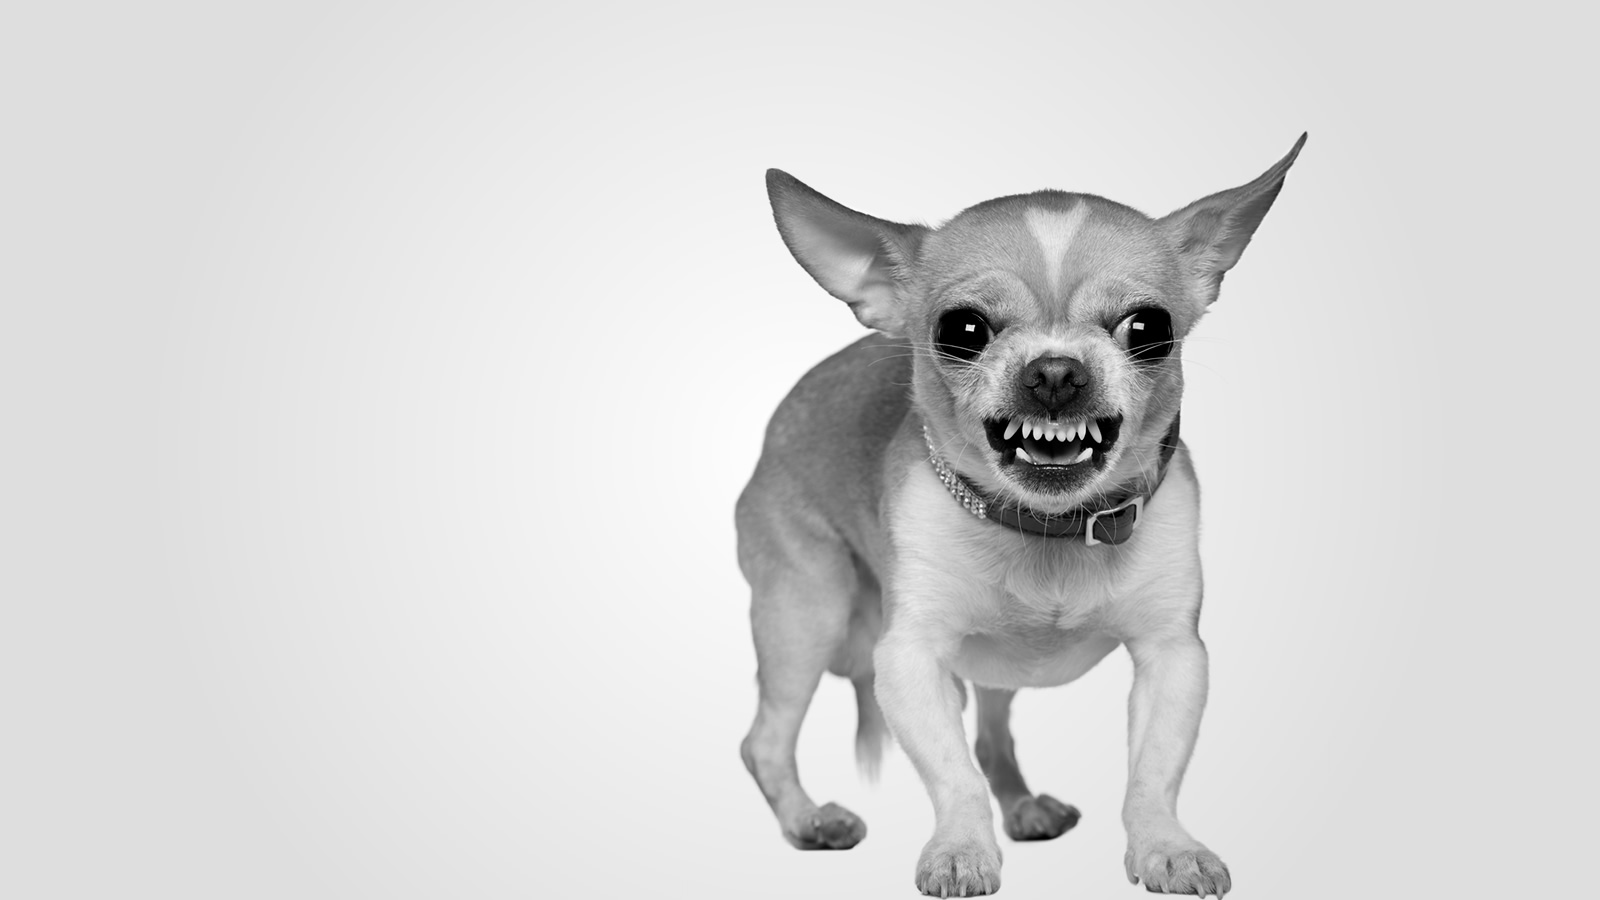 A small dog baring its teeth aggressively